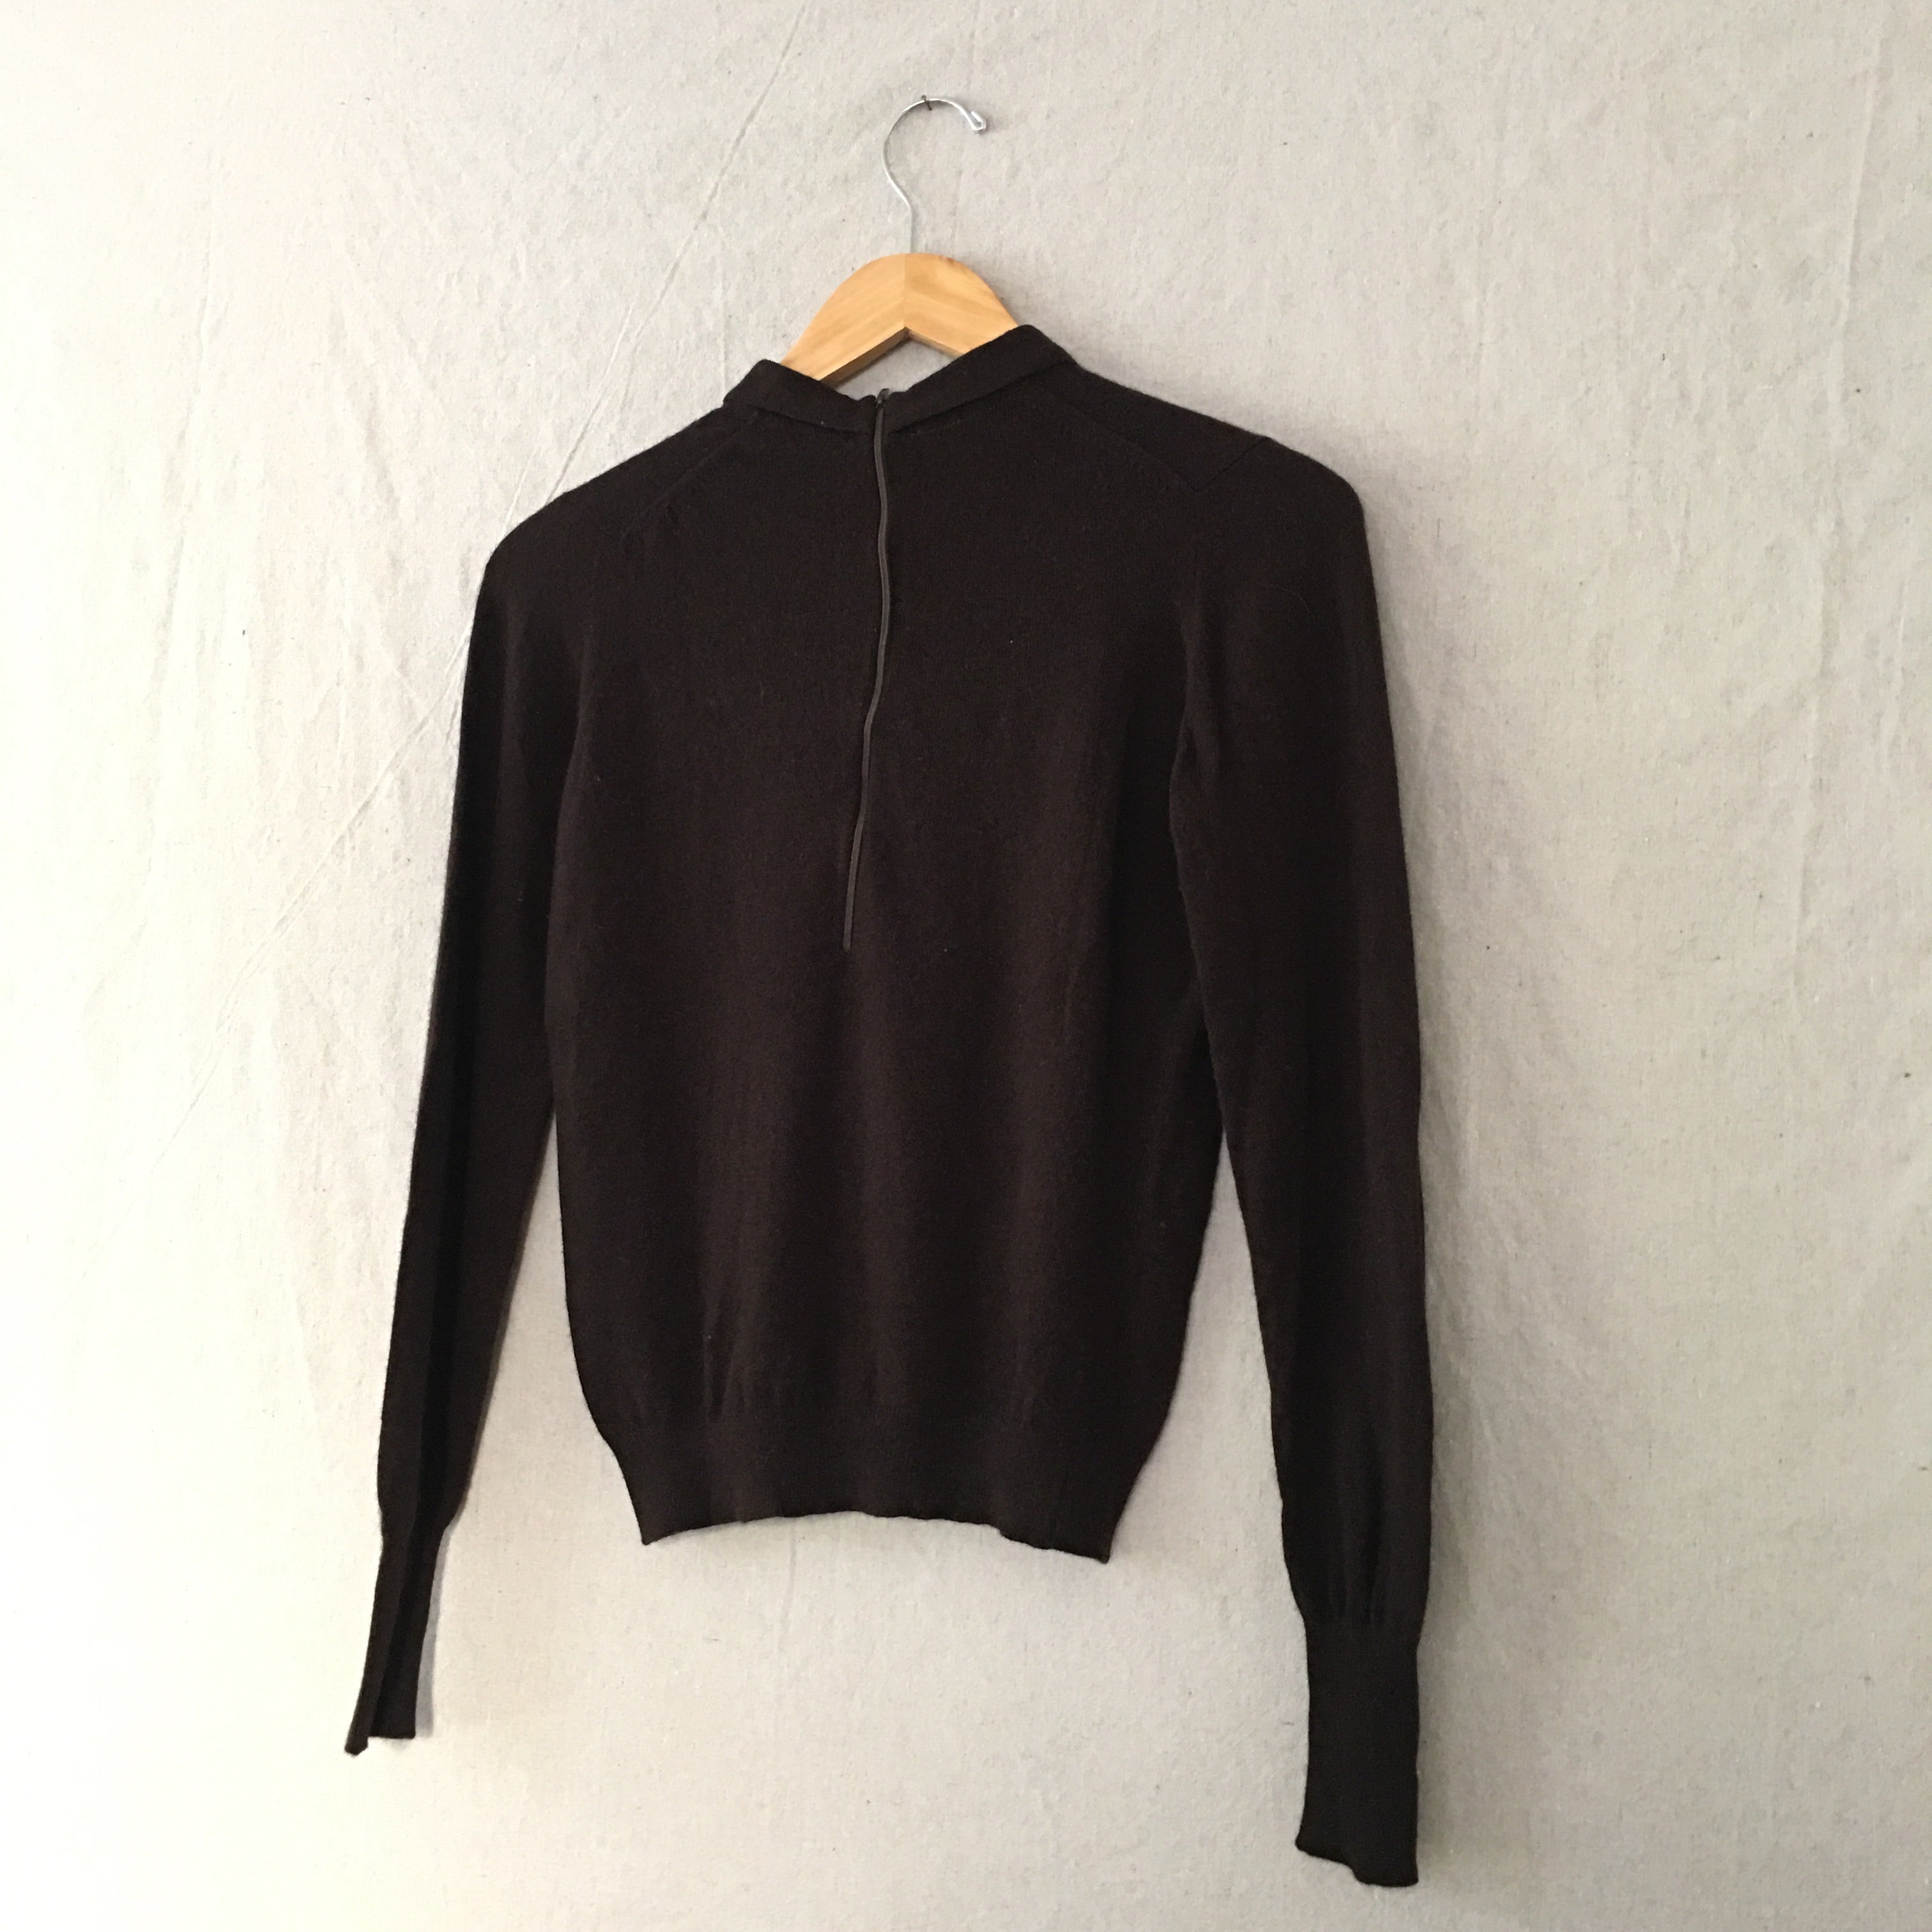 Brown Collared Sweater